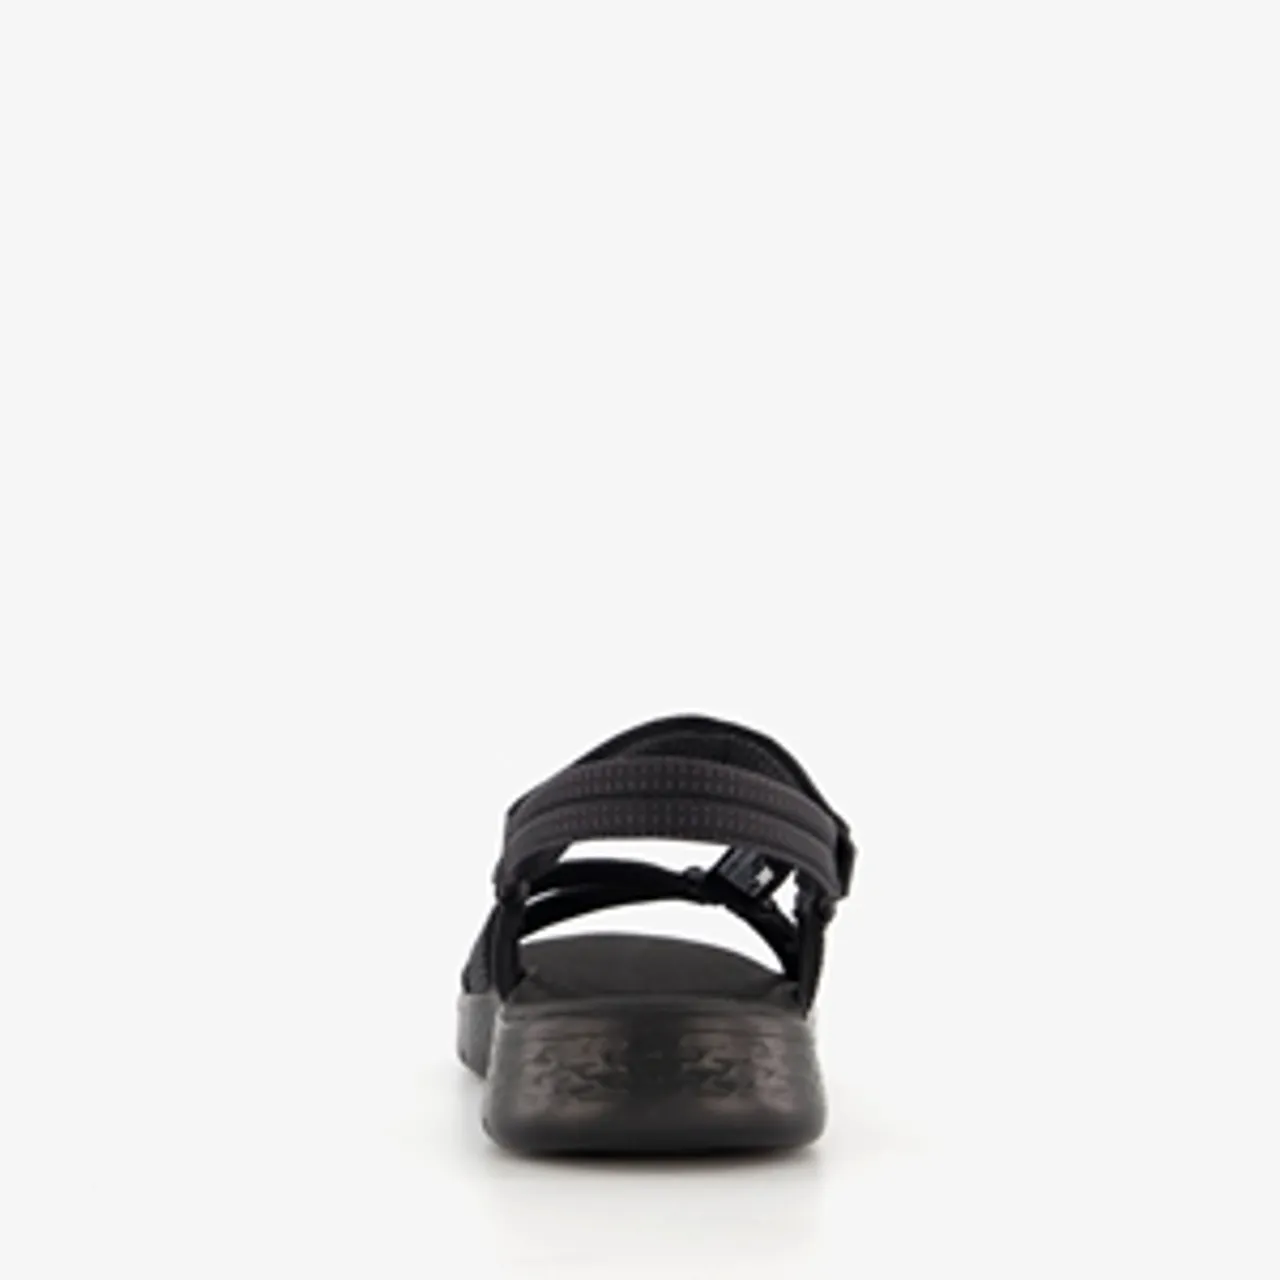 Skechers Go Walk Flex Sublime dames sandalen zwart